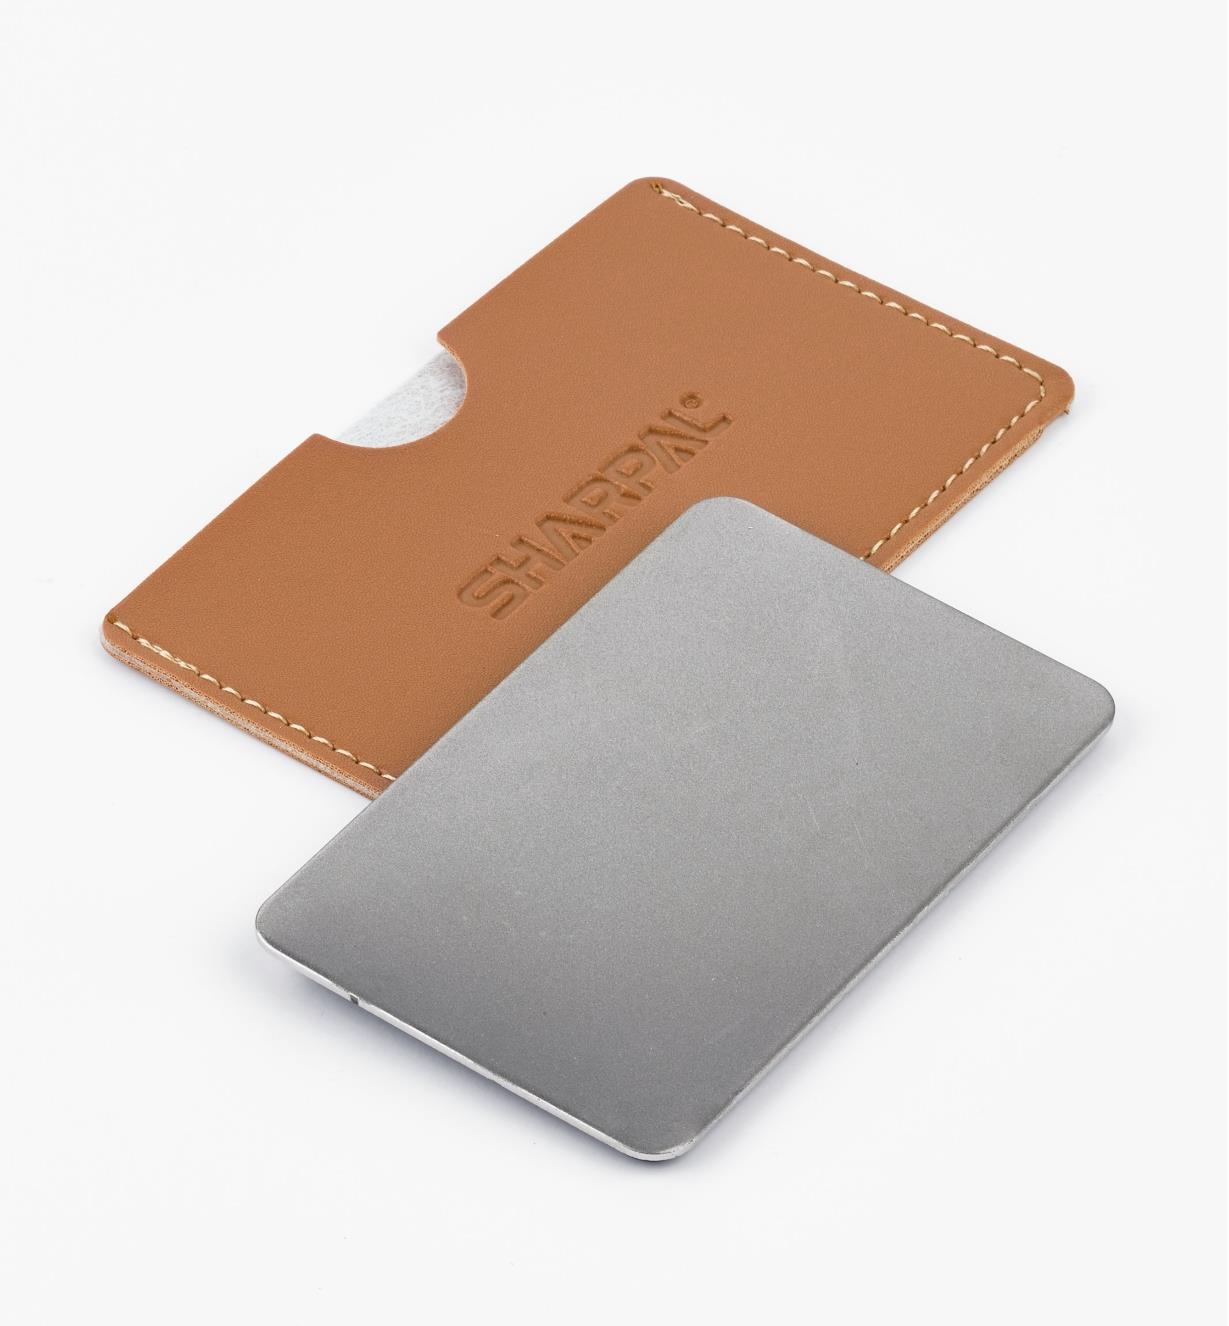 70M0283 - 1200x Credit-Card Size Sharpener